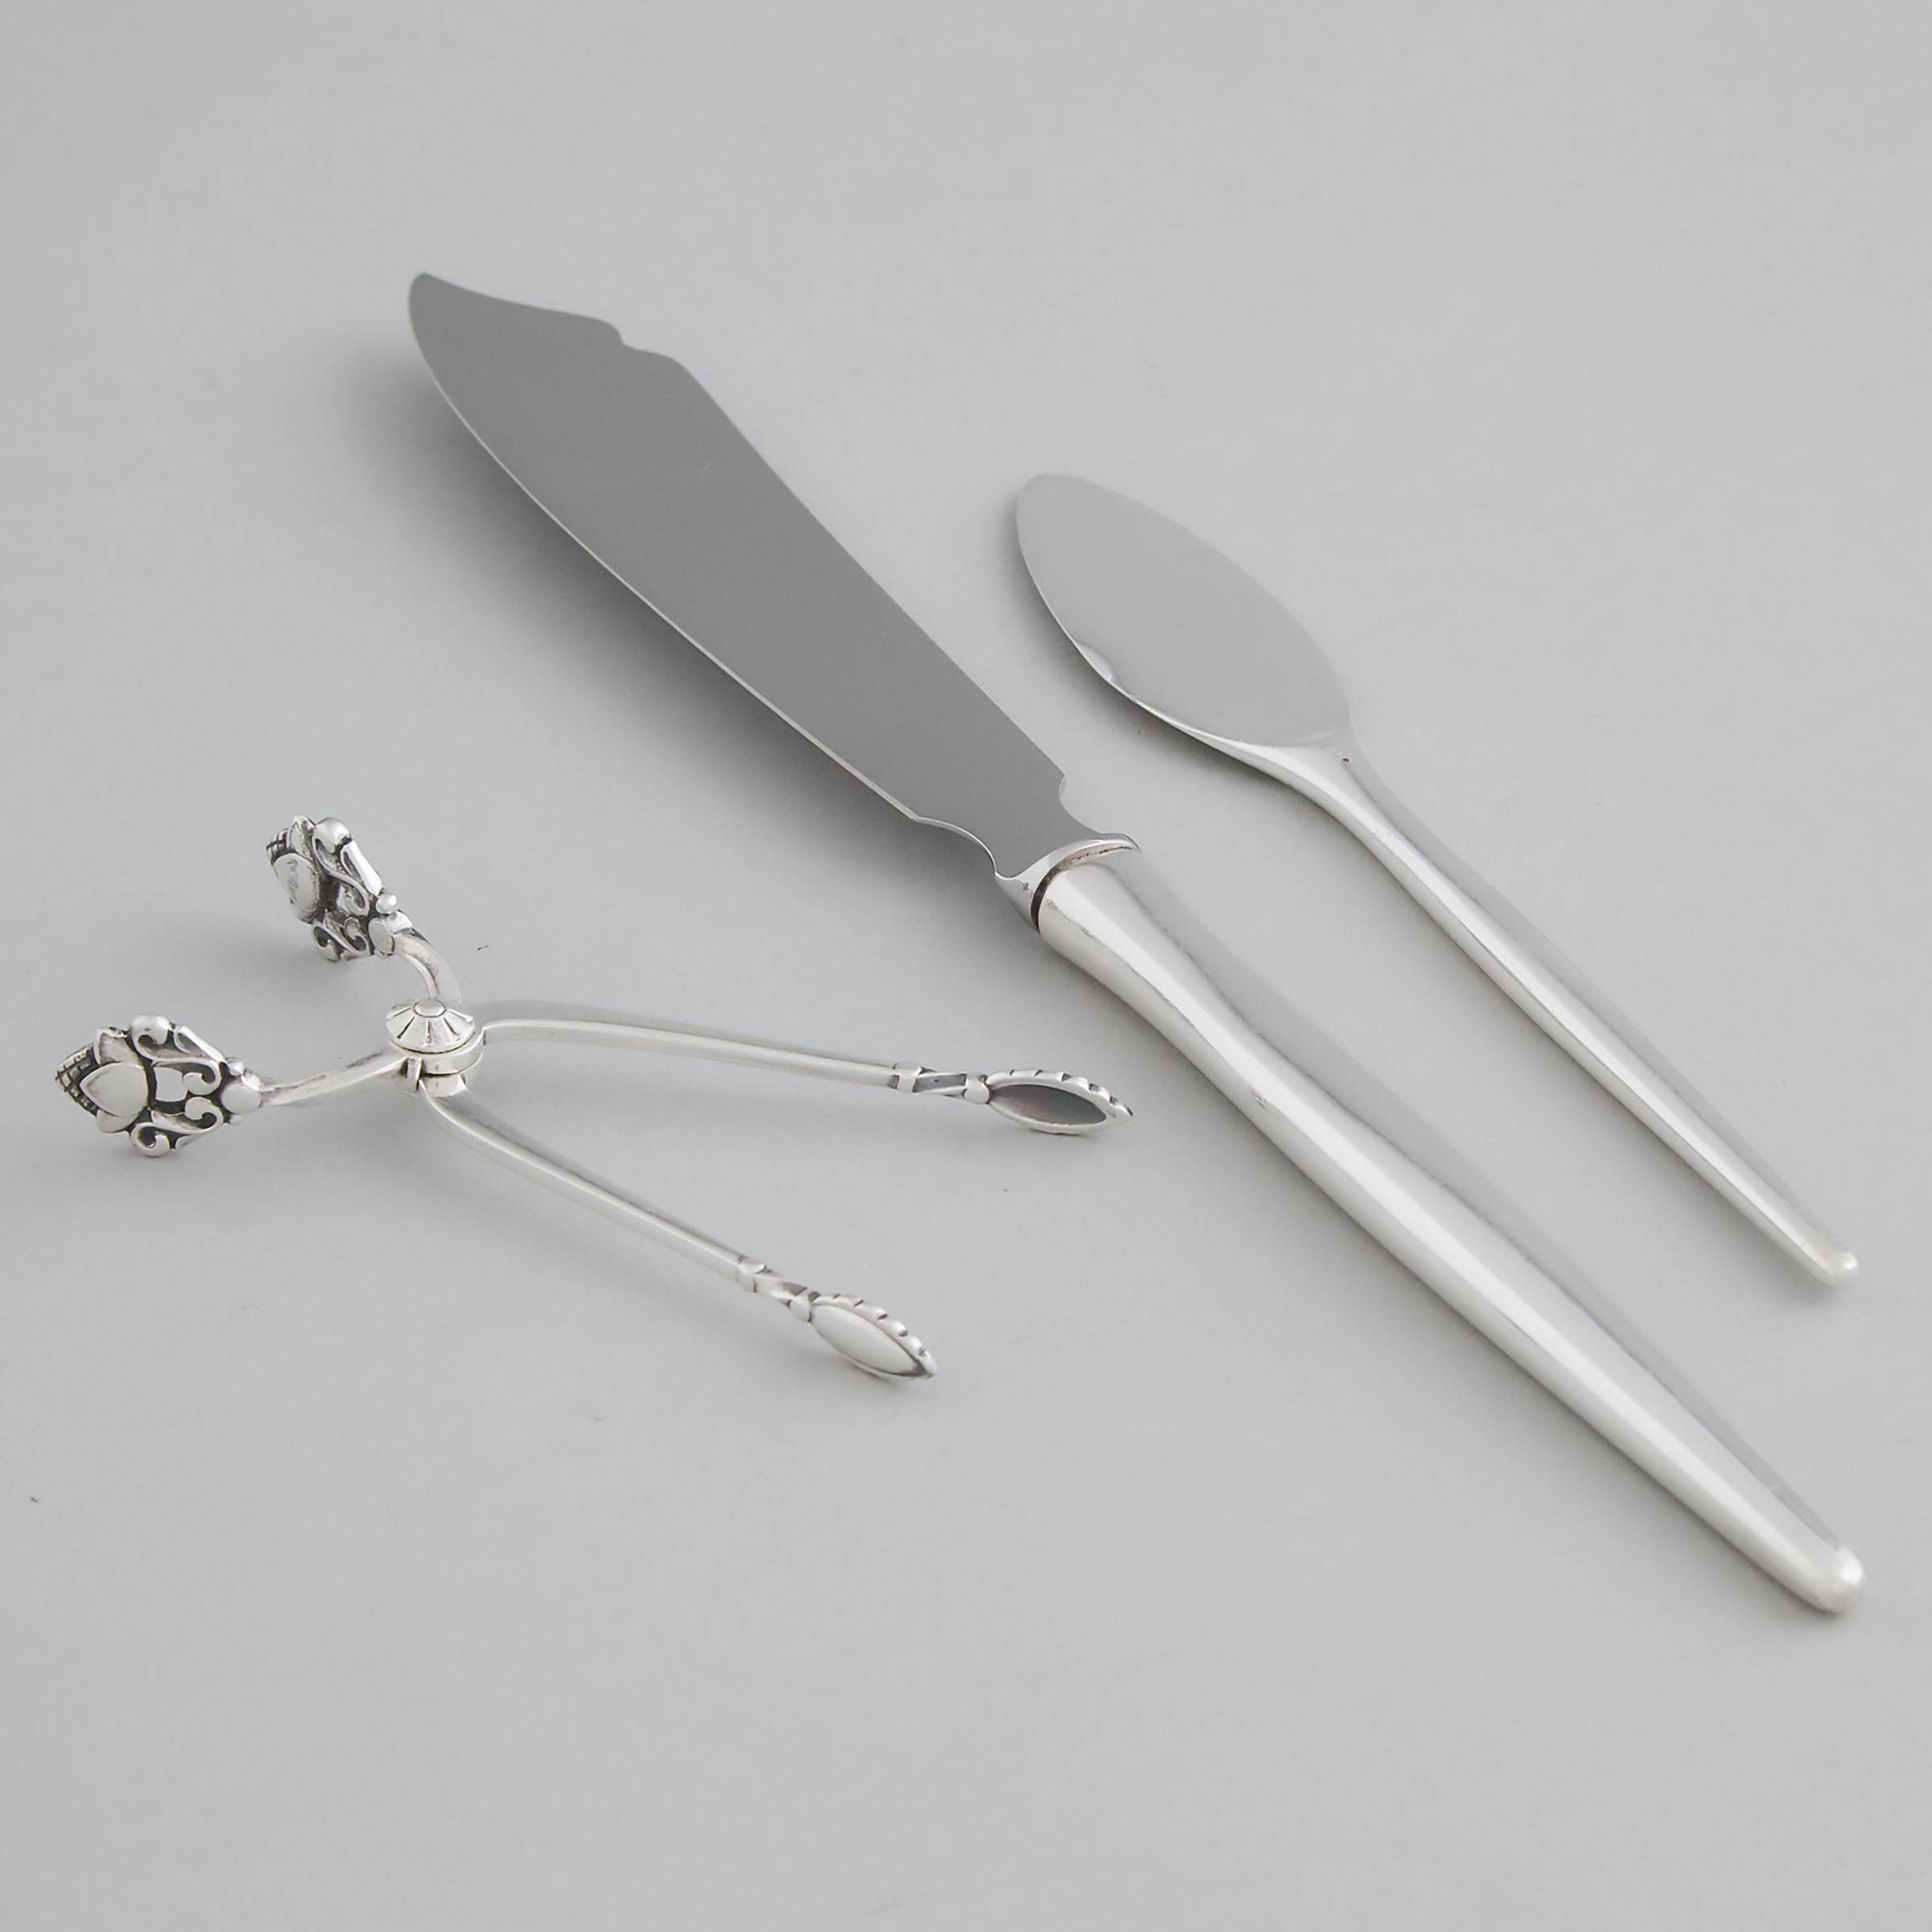 Danish Silver ‘Acorn’ Pattern Sugar Tongs, Georg Jensen, and Two Knives, Anton Michelsen, Copenhagen, 20th century